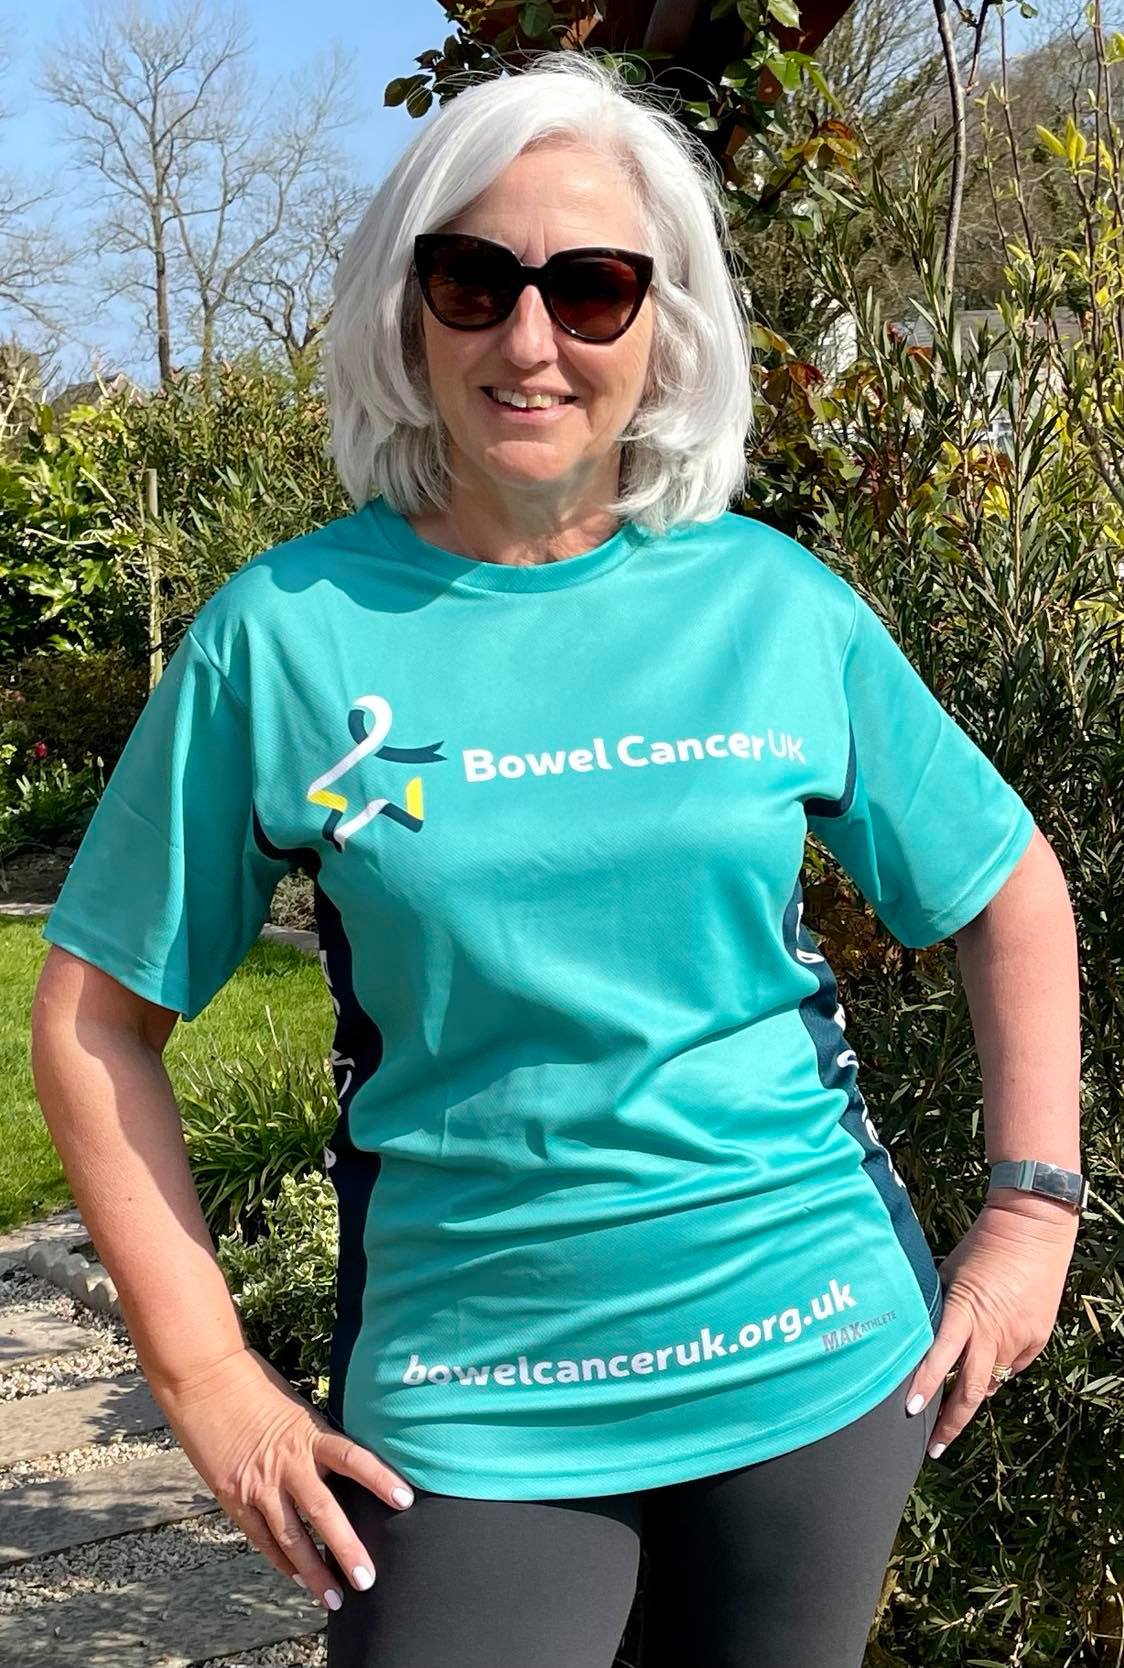 Fundraising for Bowel Cancer UK